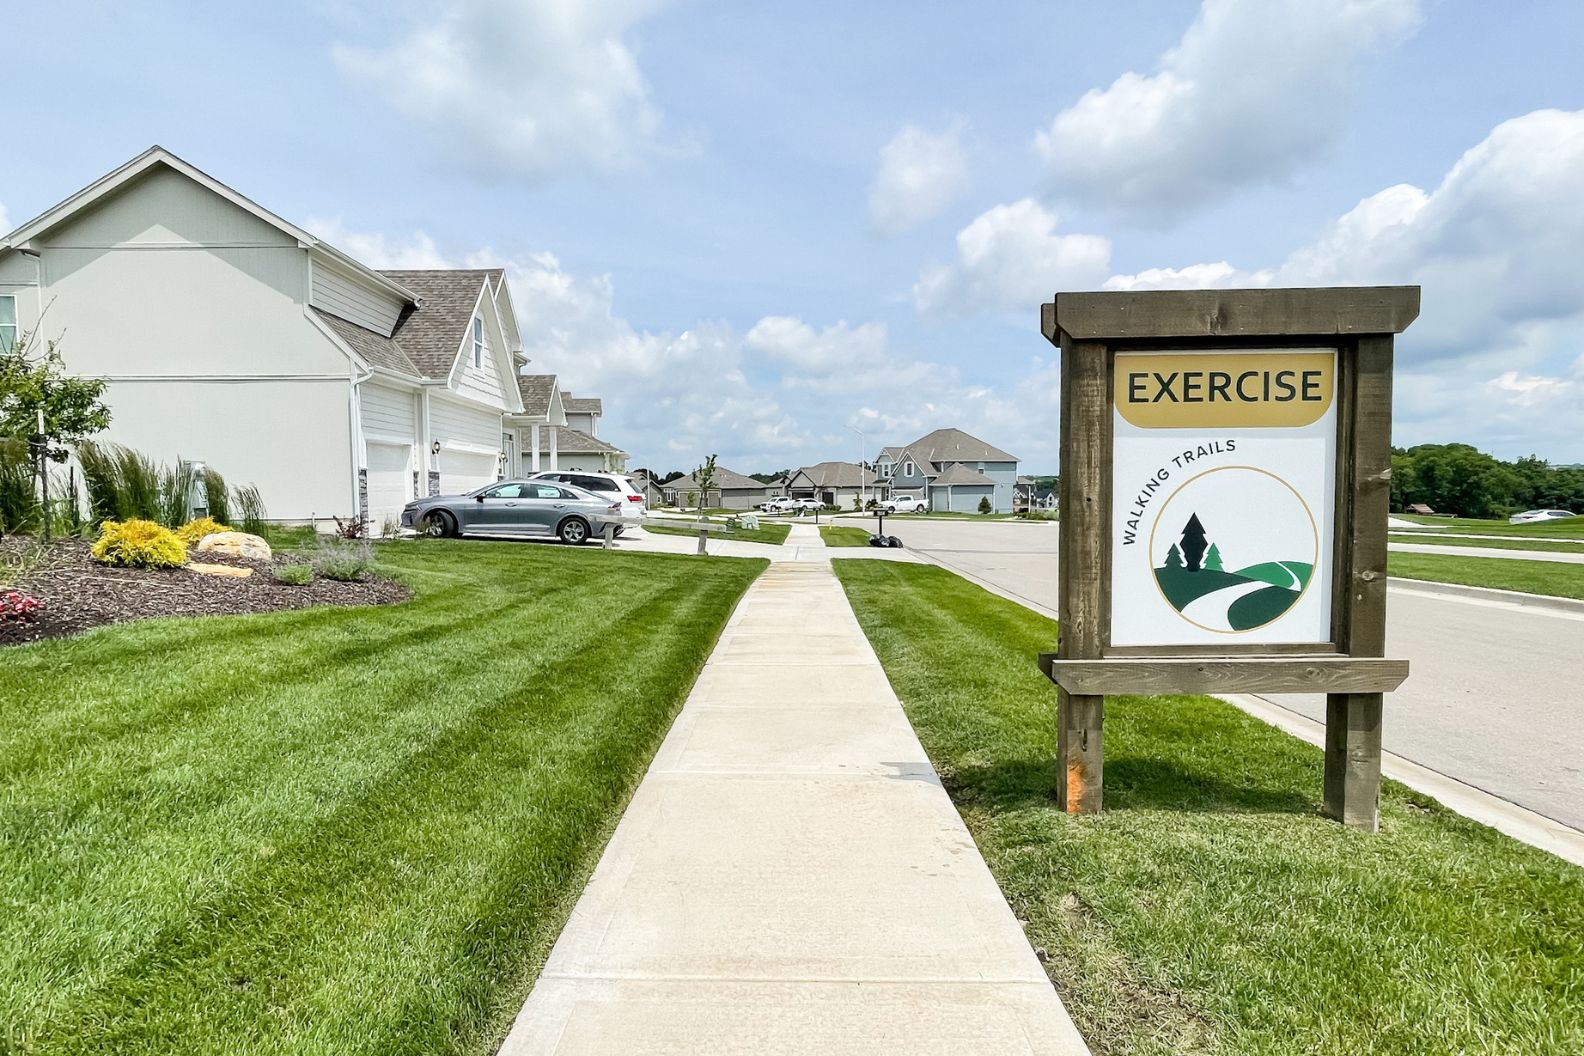 Hearthside Homes Of Kansas City - Davidson Farms At Shoal Creek Exercise Walking Trails